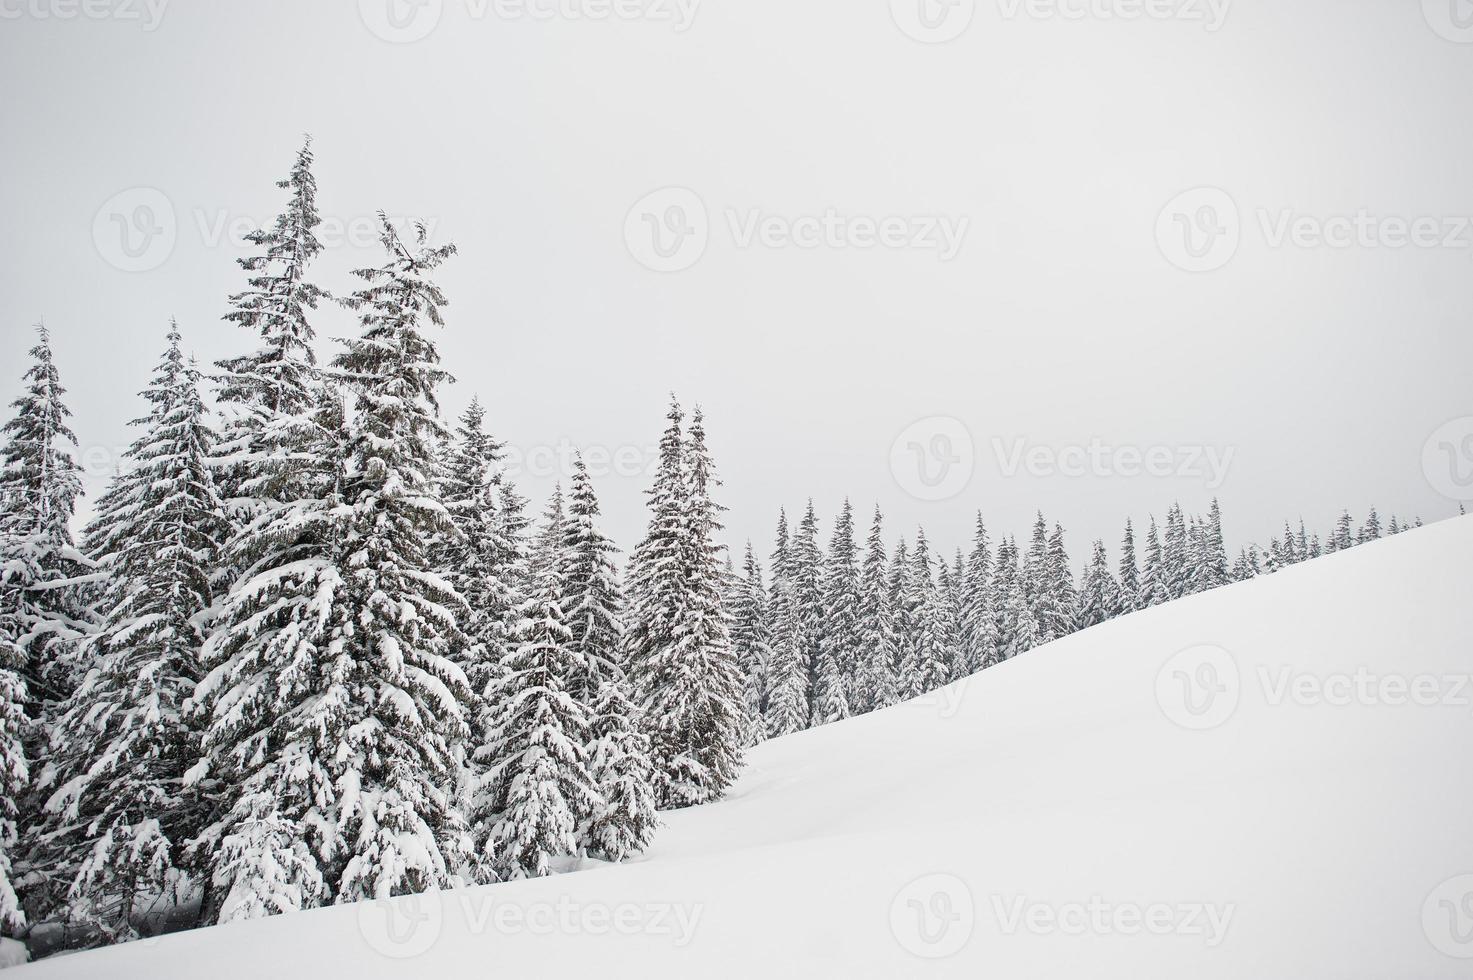 pini coperti di neve sulla montagna chomiak. splendidi paesaggi invernali delle montagne dei Carpazi, ucraina. natura gelata. foto